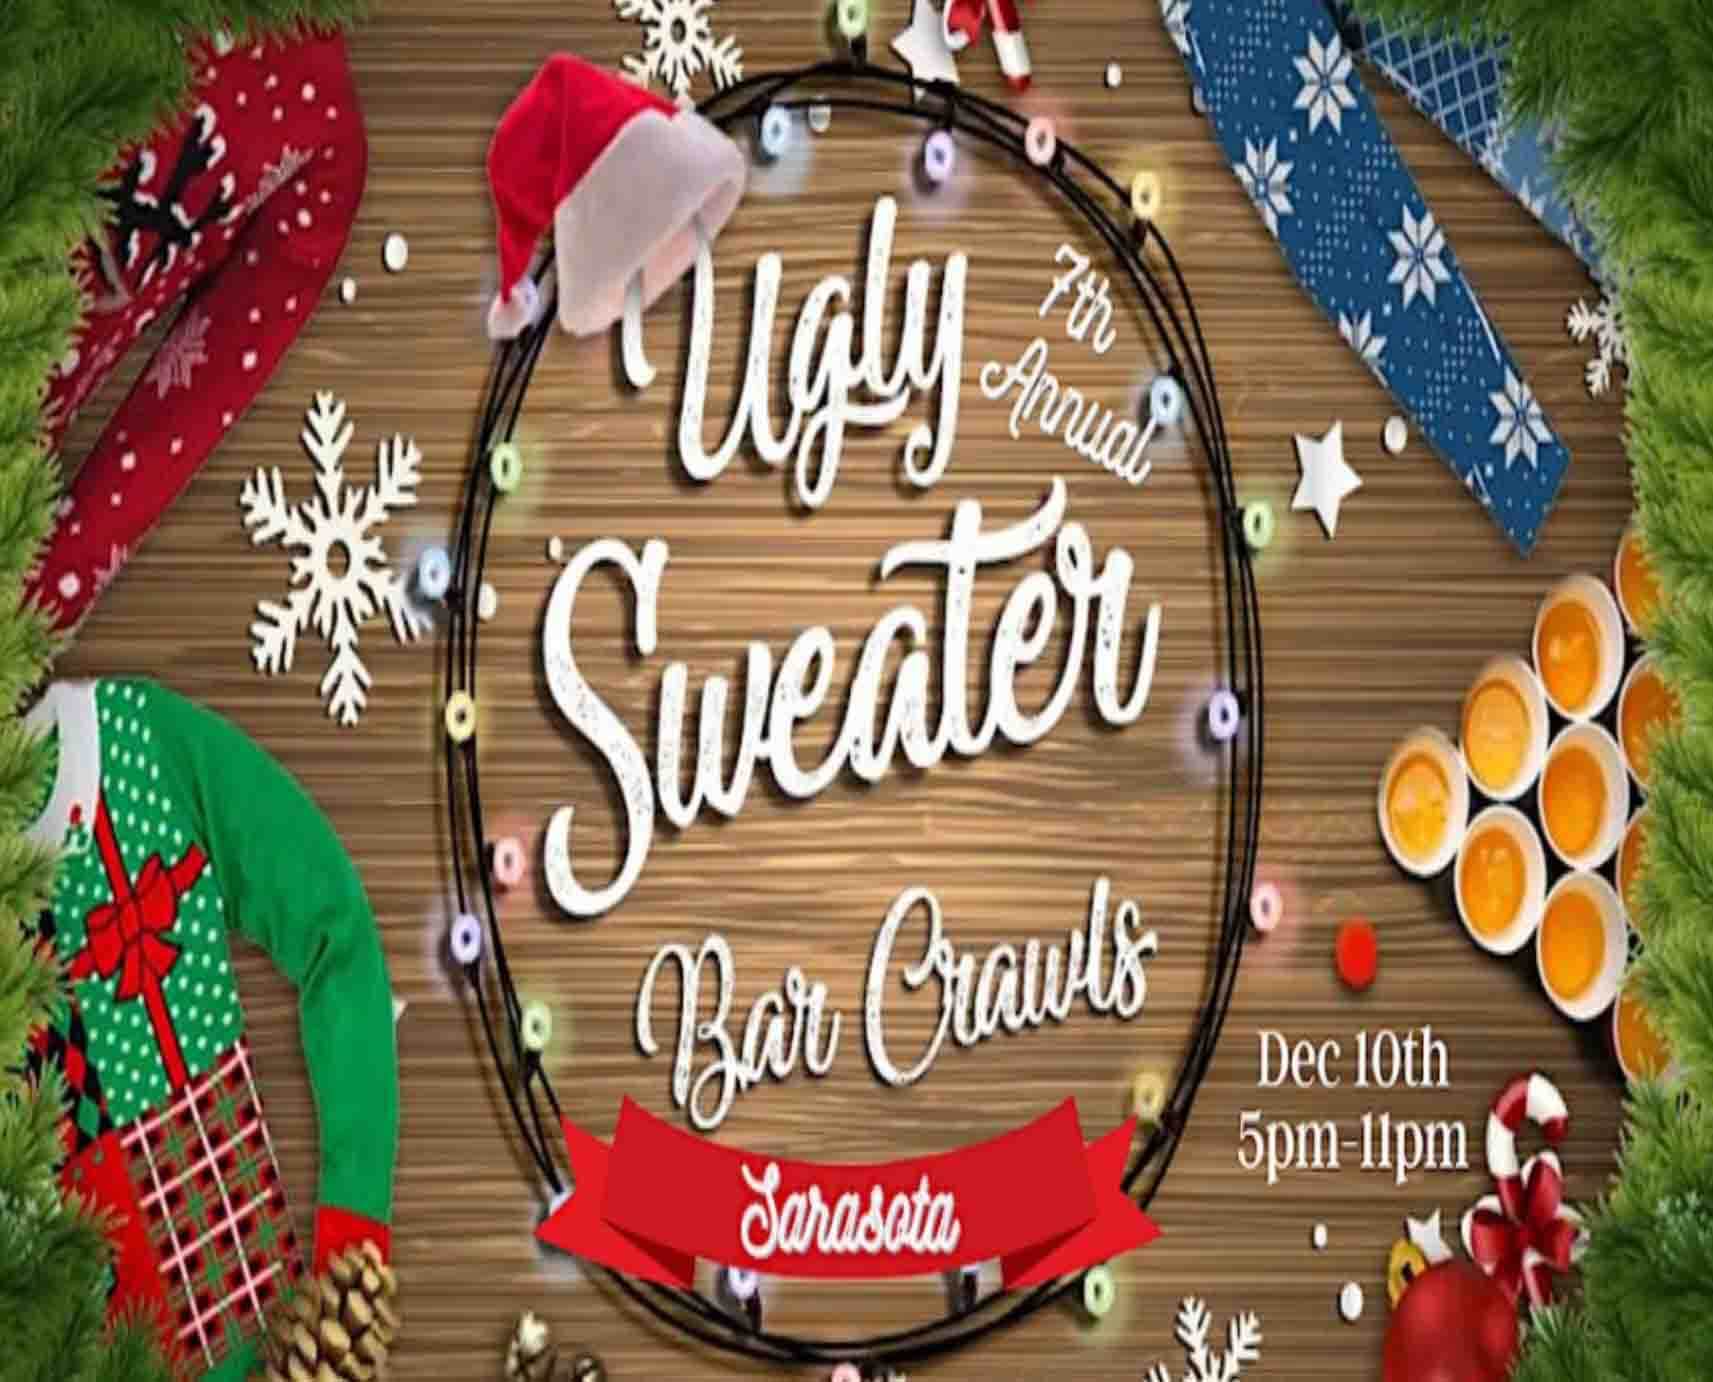 7th Annual Ugly Sweater Crawl Sarasota